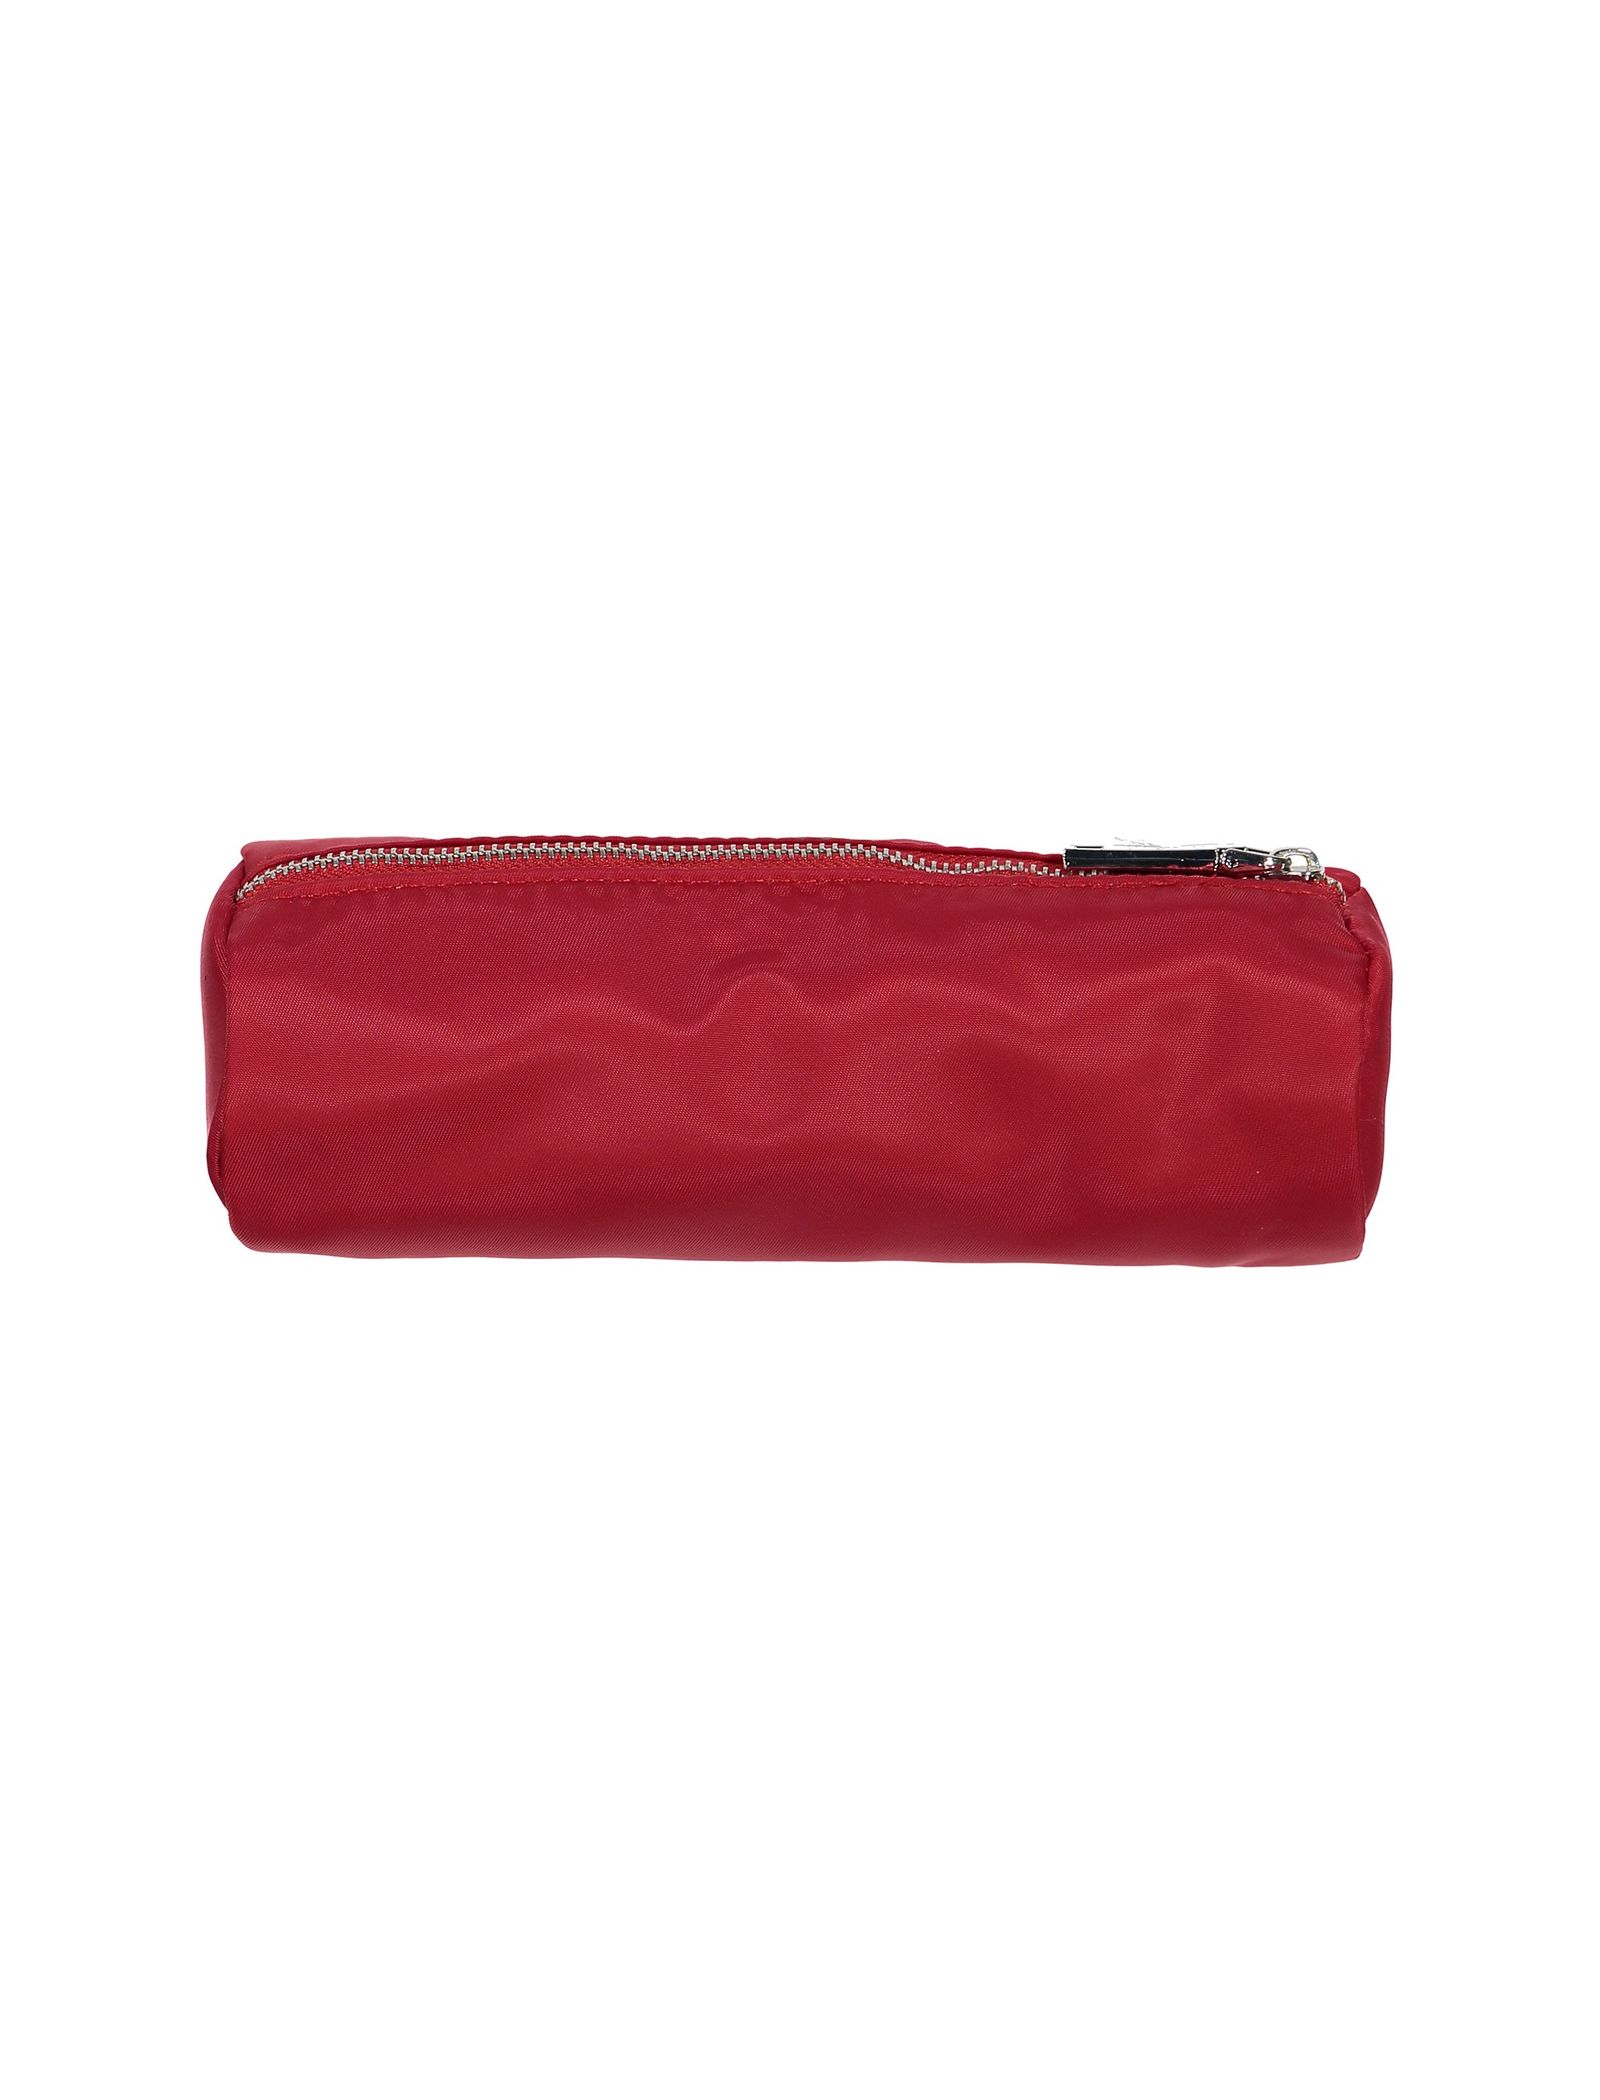 کیف لوازم آرایش زنانه - مانگو - قرمز - 3